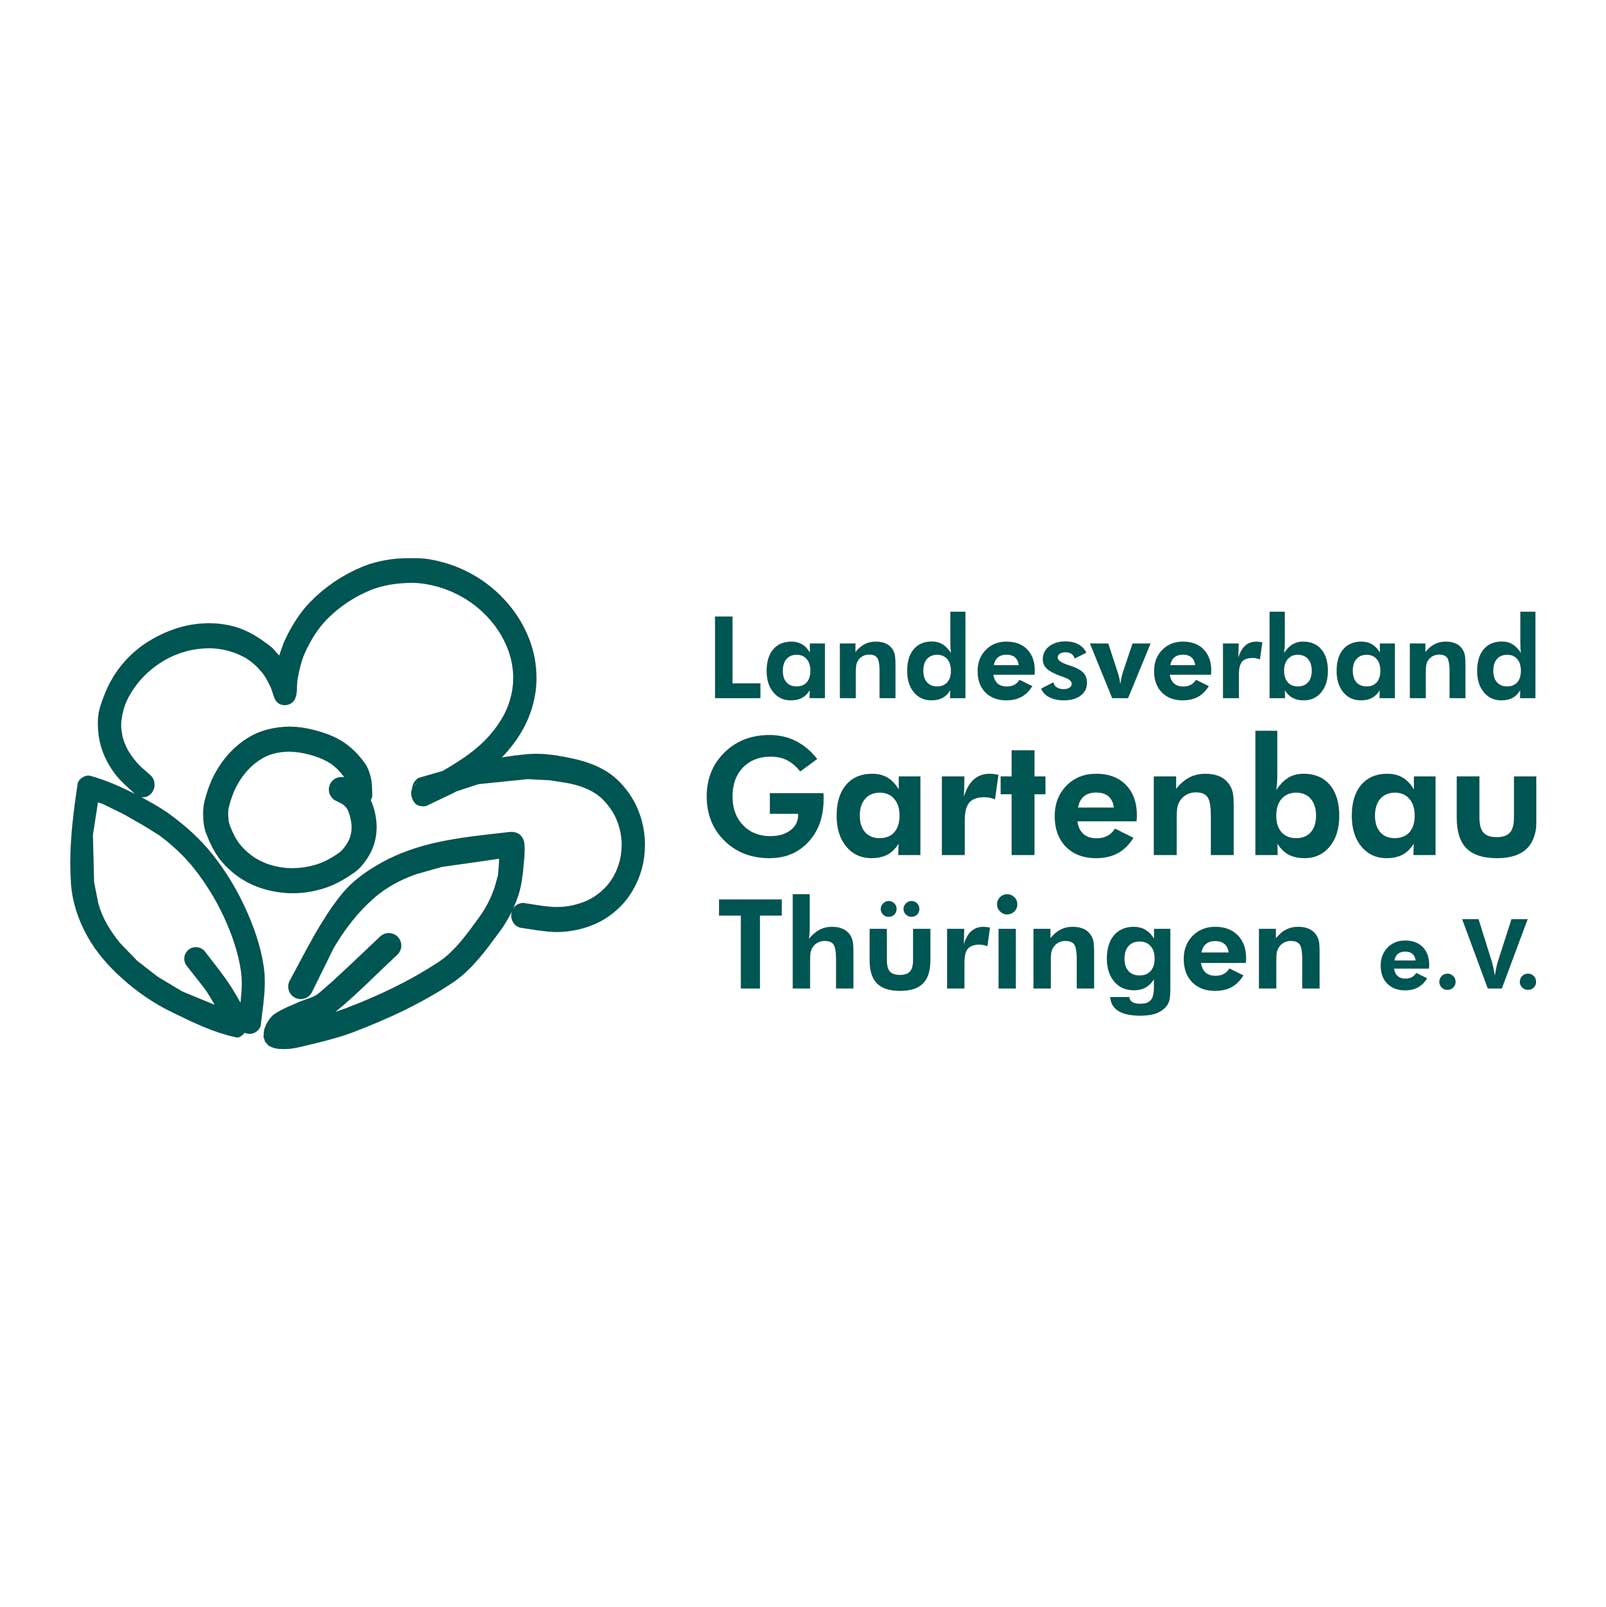 Landesverband Gartenbau Thüringen e.V.